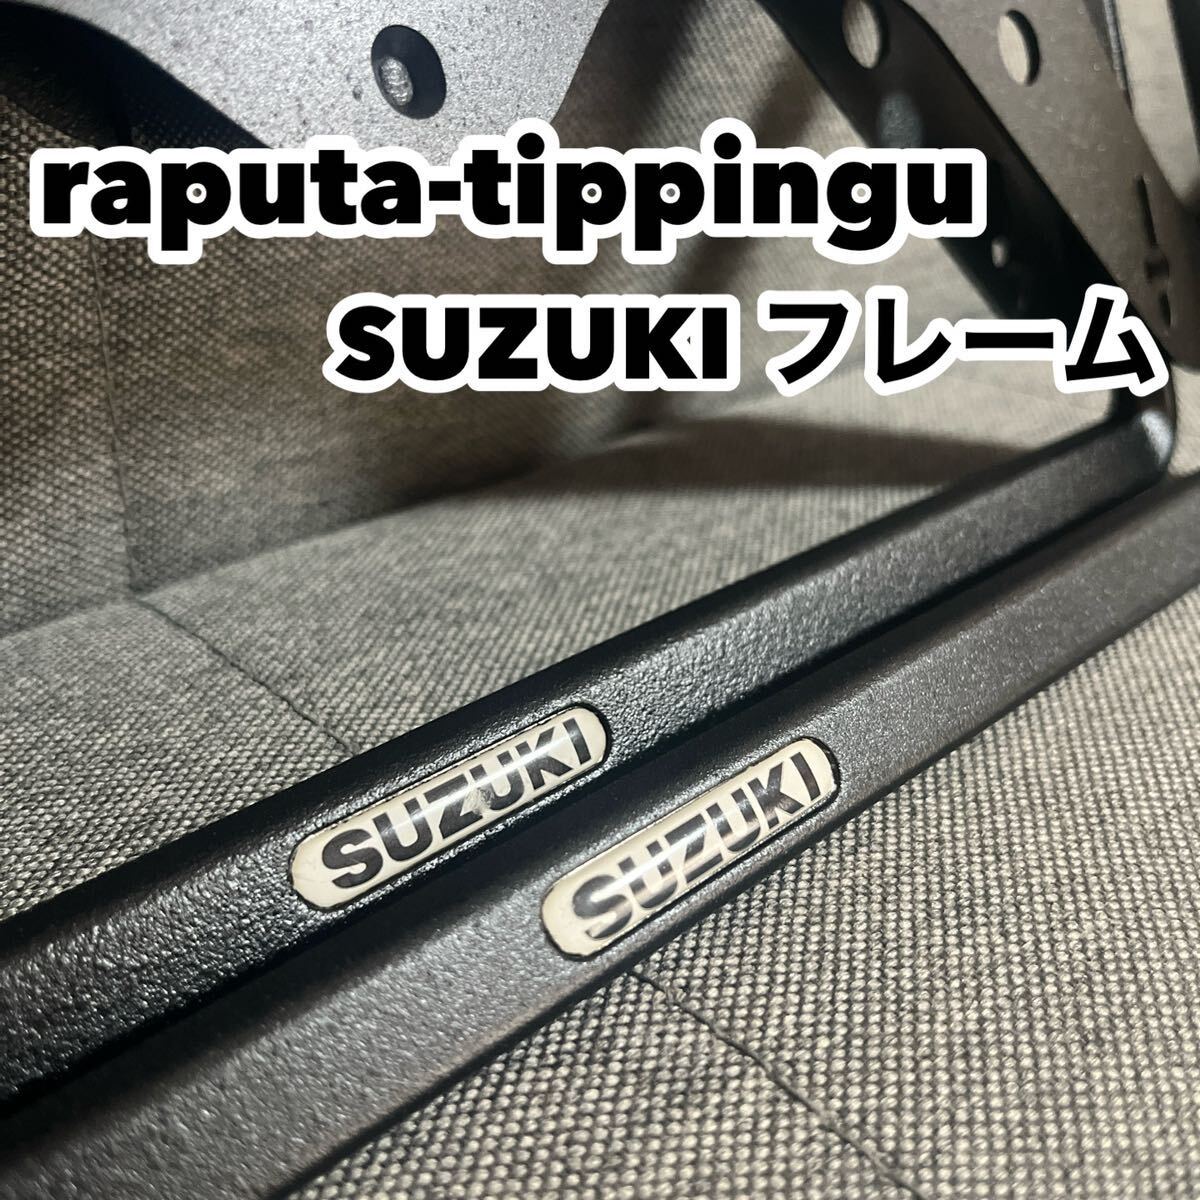 SUZUKI ナンバーフレーム カスタムペイント ラプターチッピング 2枚セット_画像1